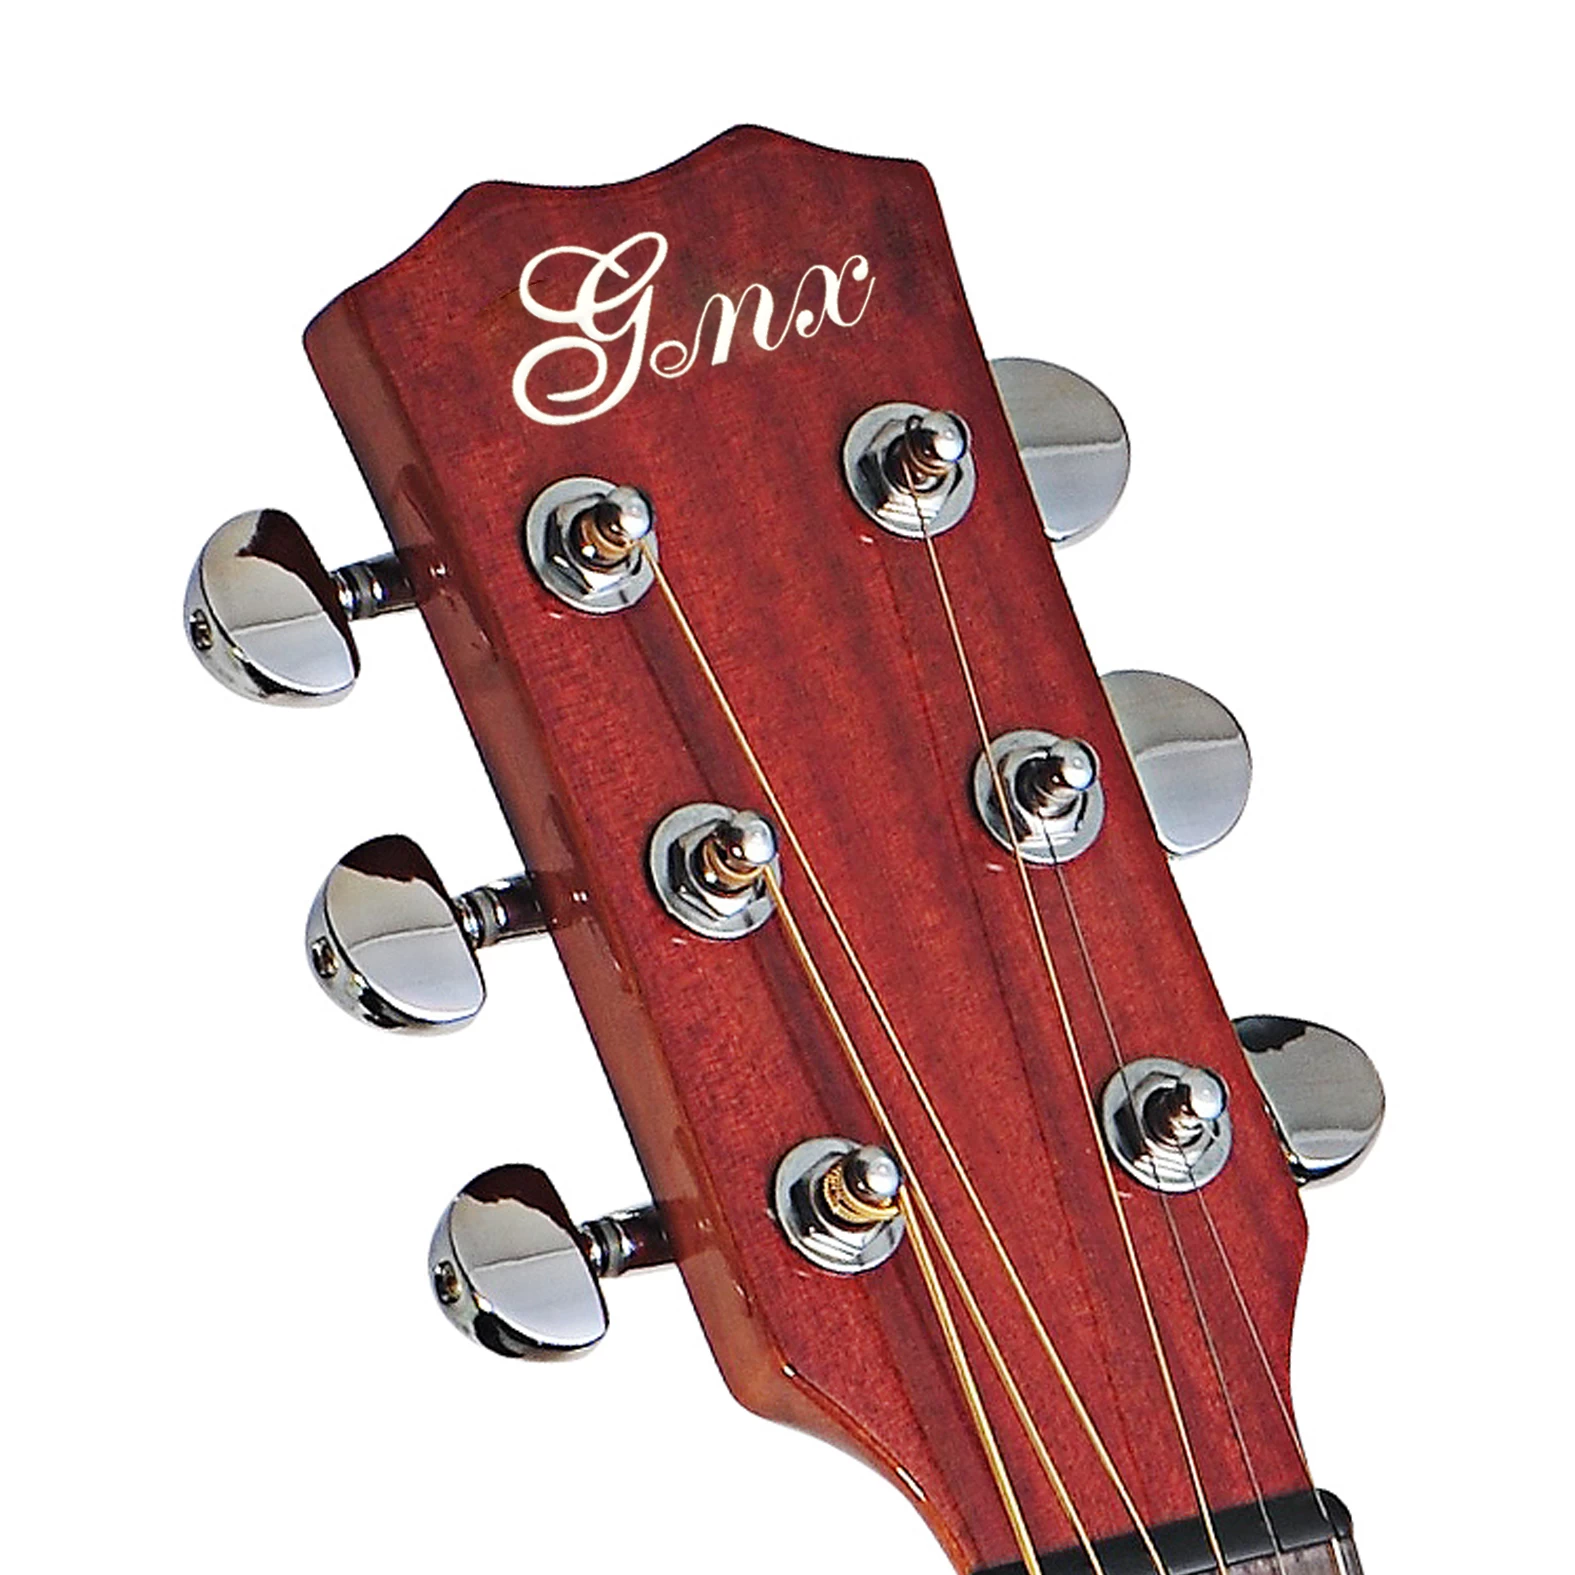 39 inch goedkope klassieke gitaar voor beginners YF-393